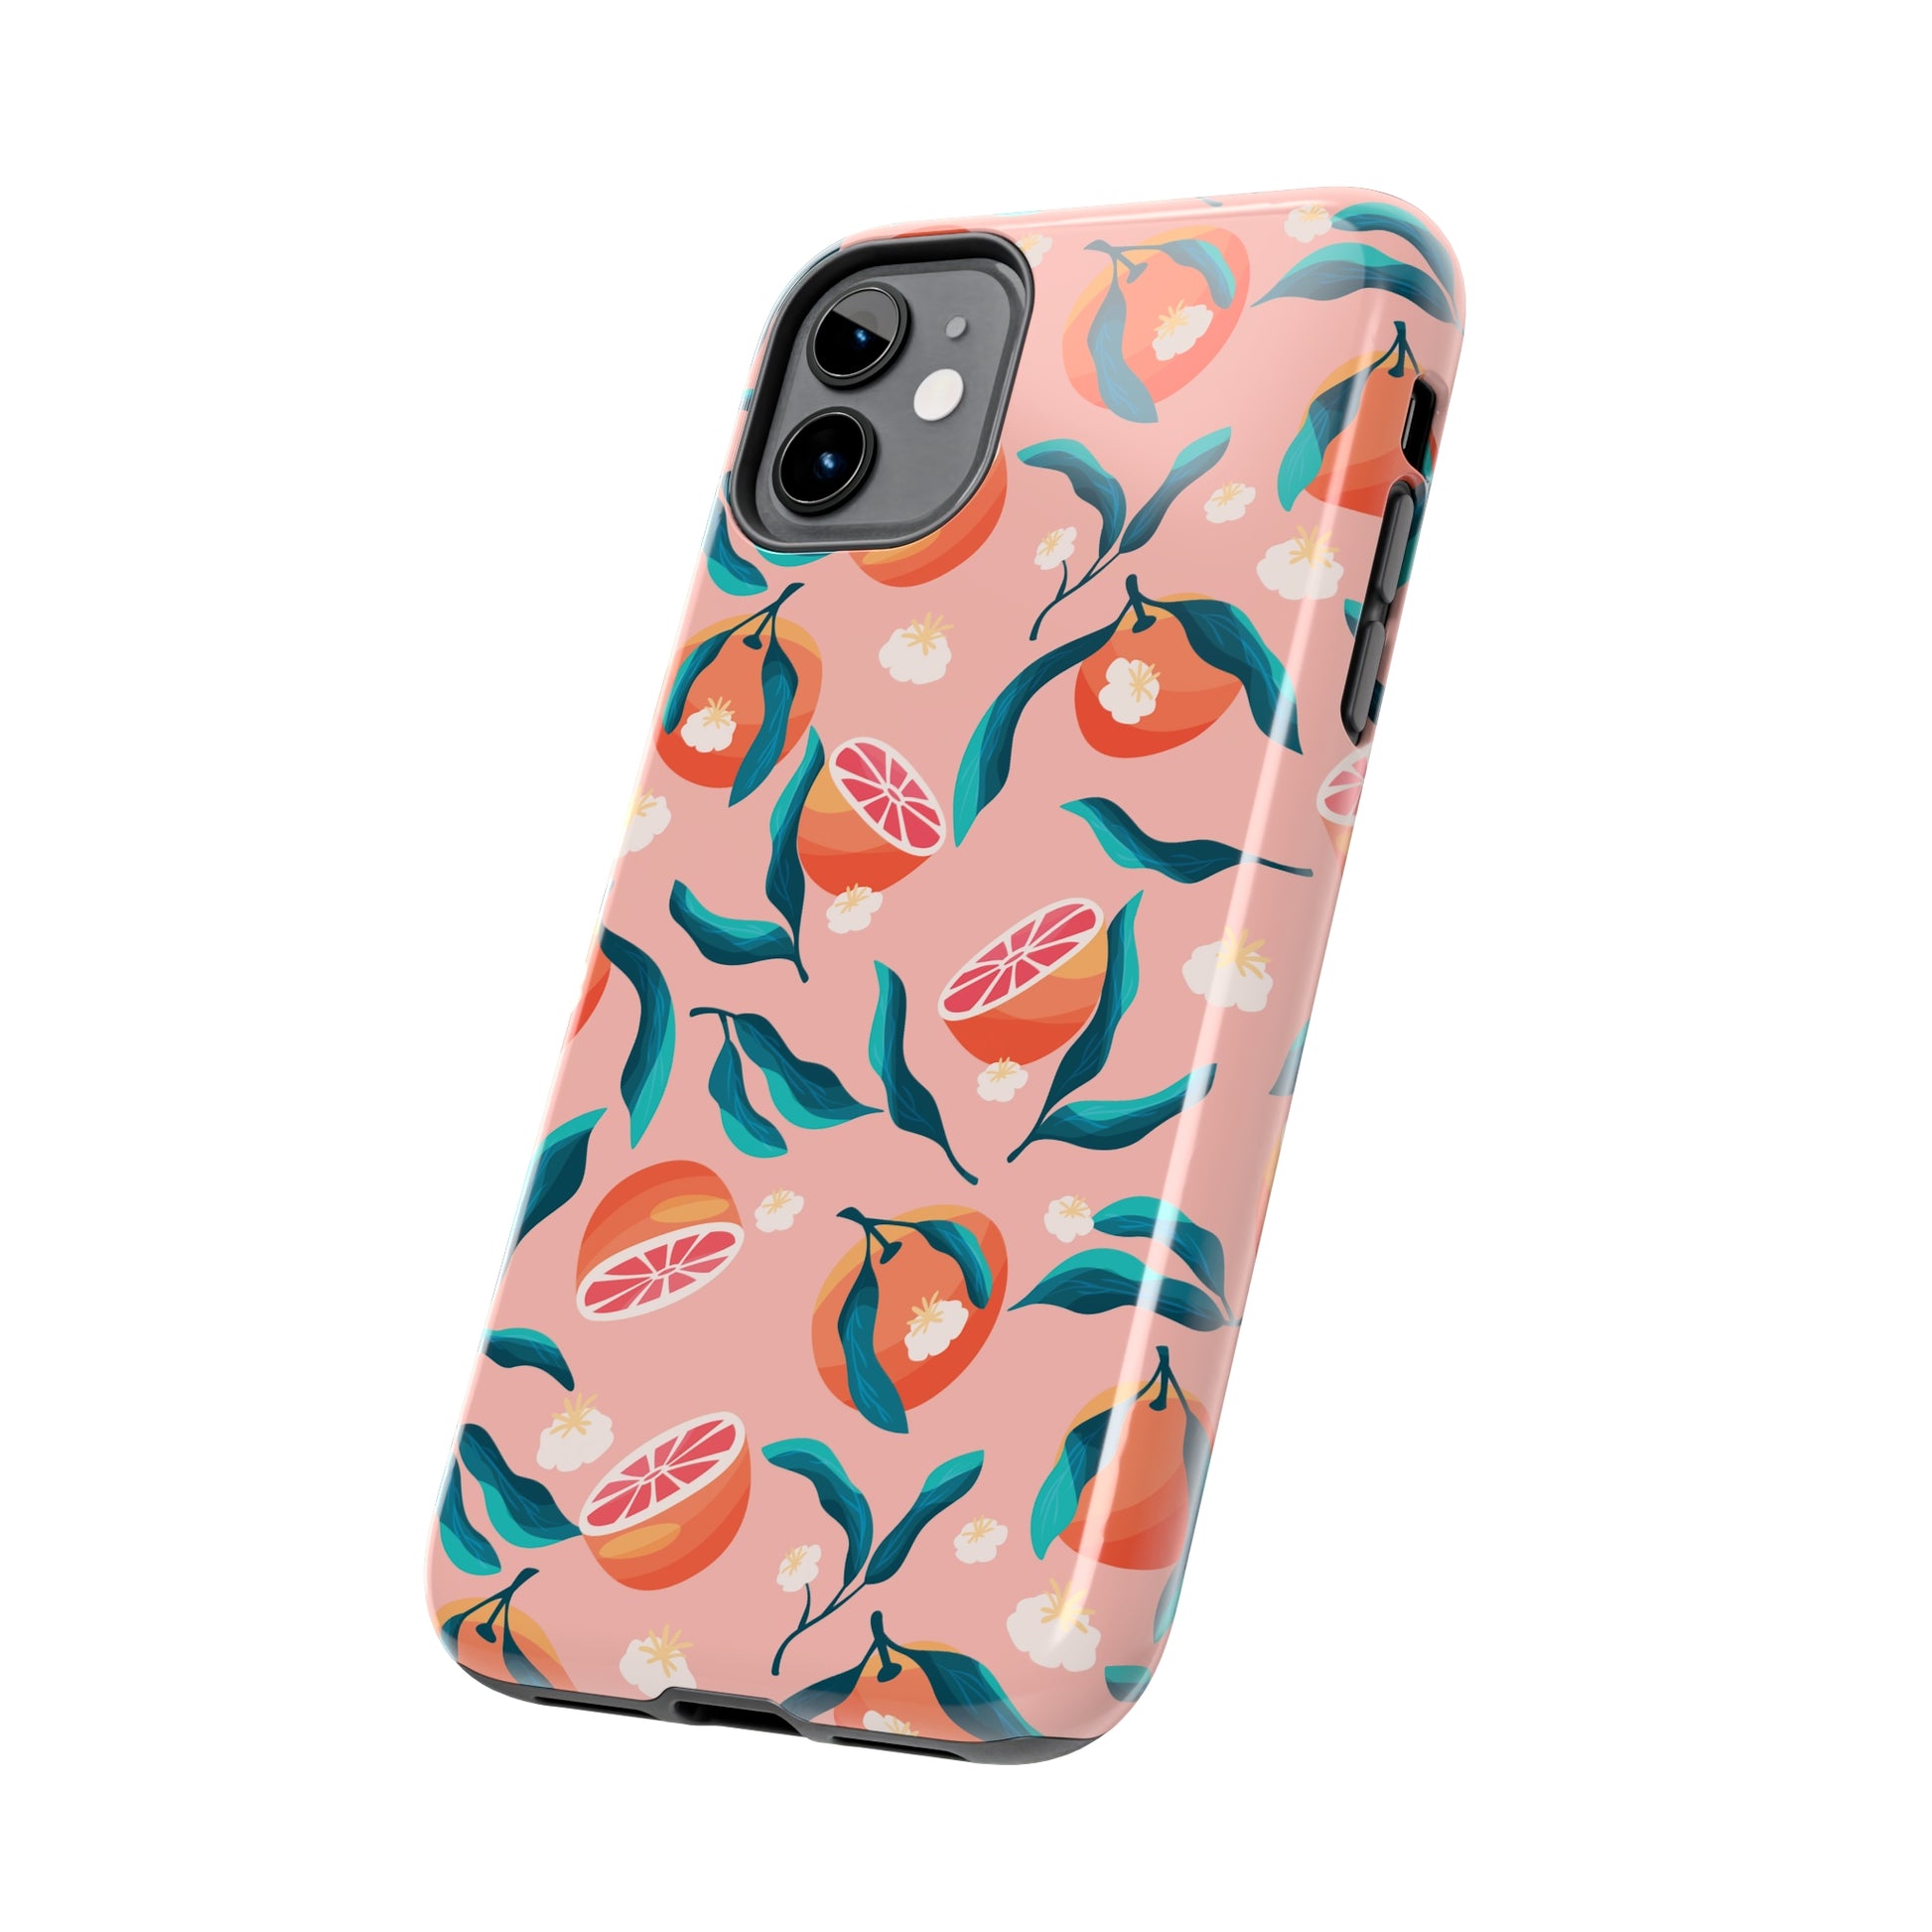 Orange Perfection - Phone Case For